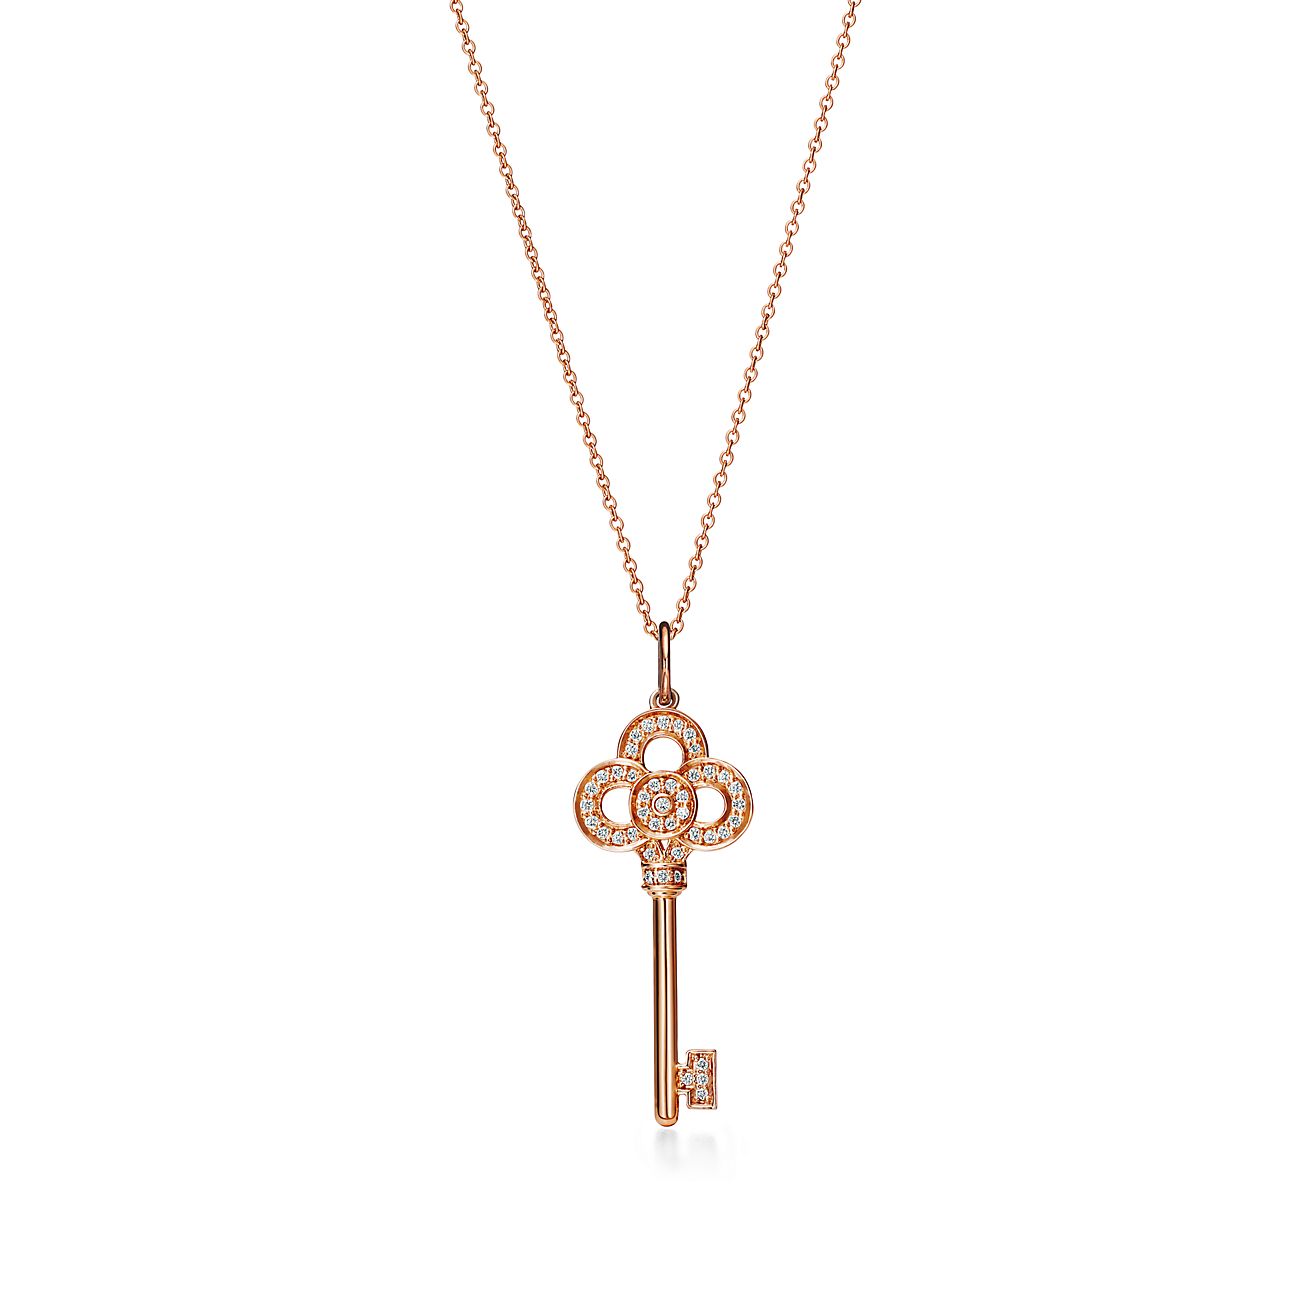 Tiffany Keys mini crown key pendant in 18k rose gold with diamonds.